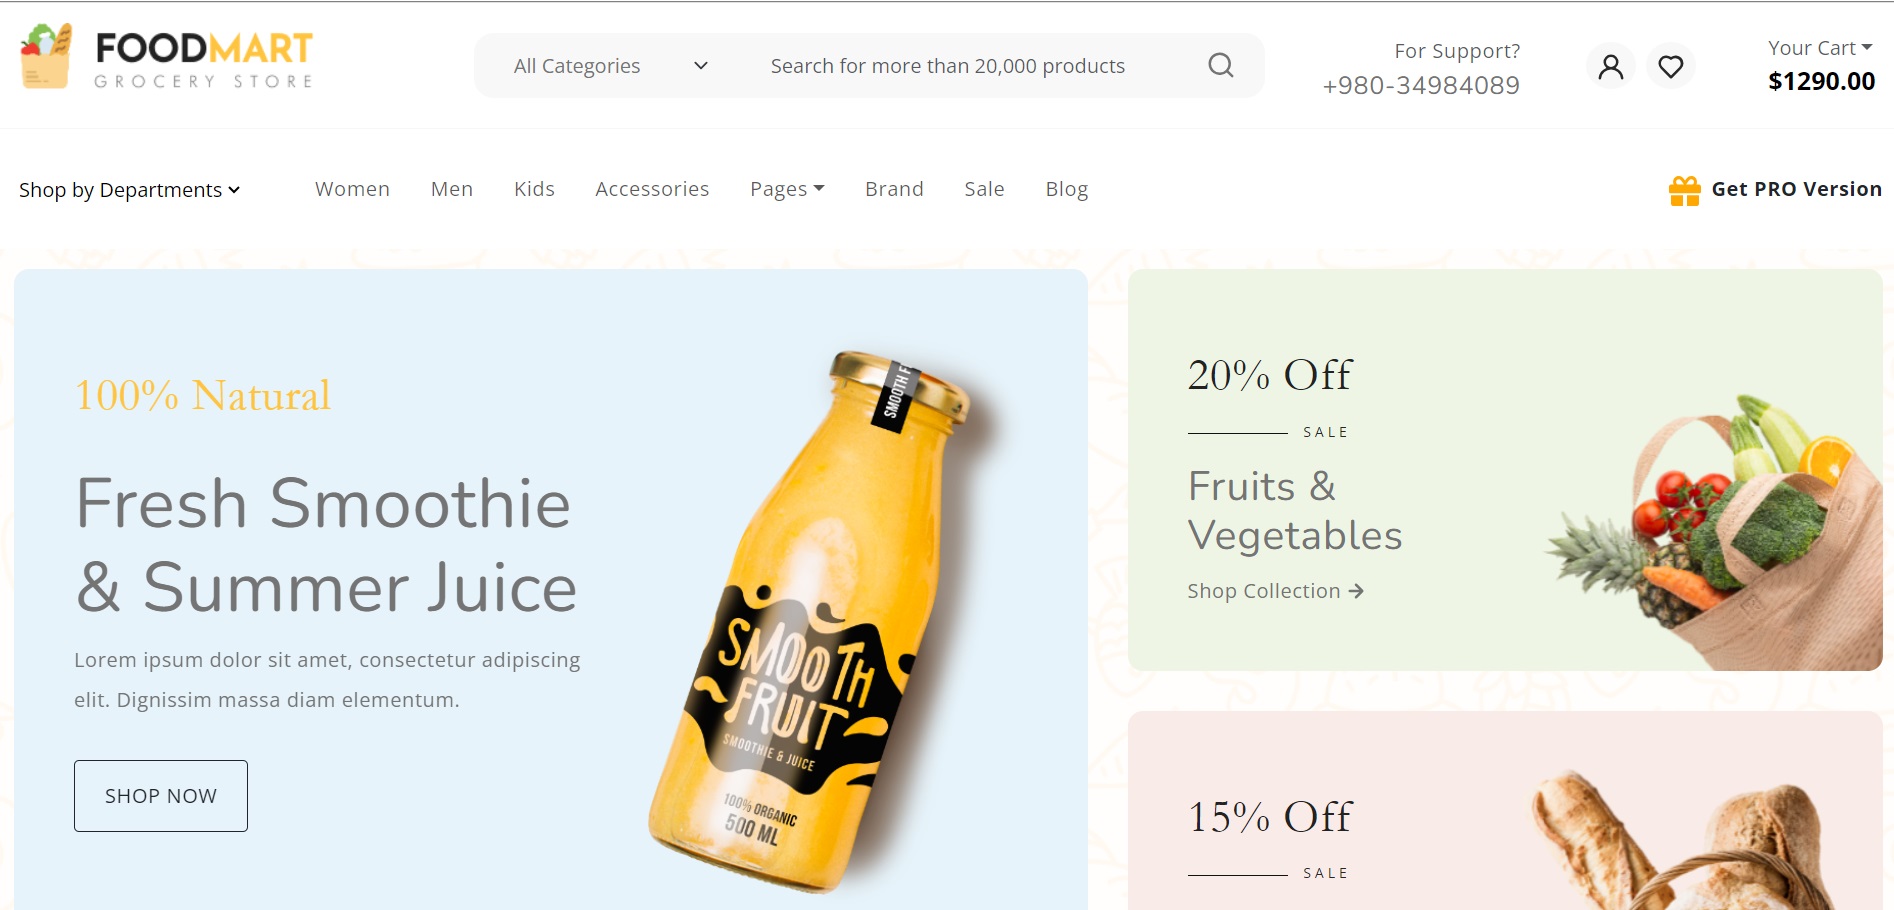 React Free FoodMart Ecommerce Website Template